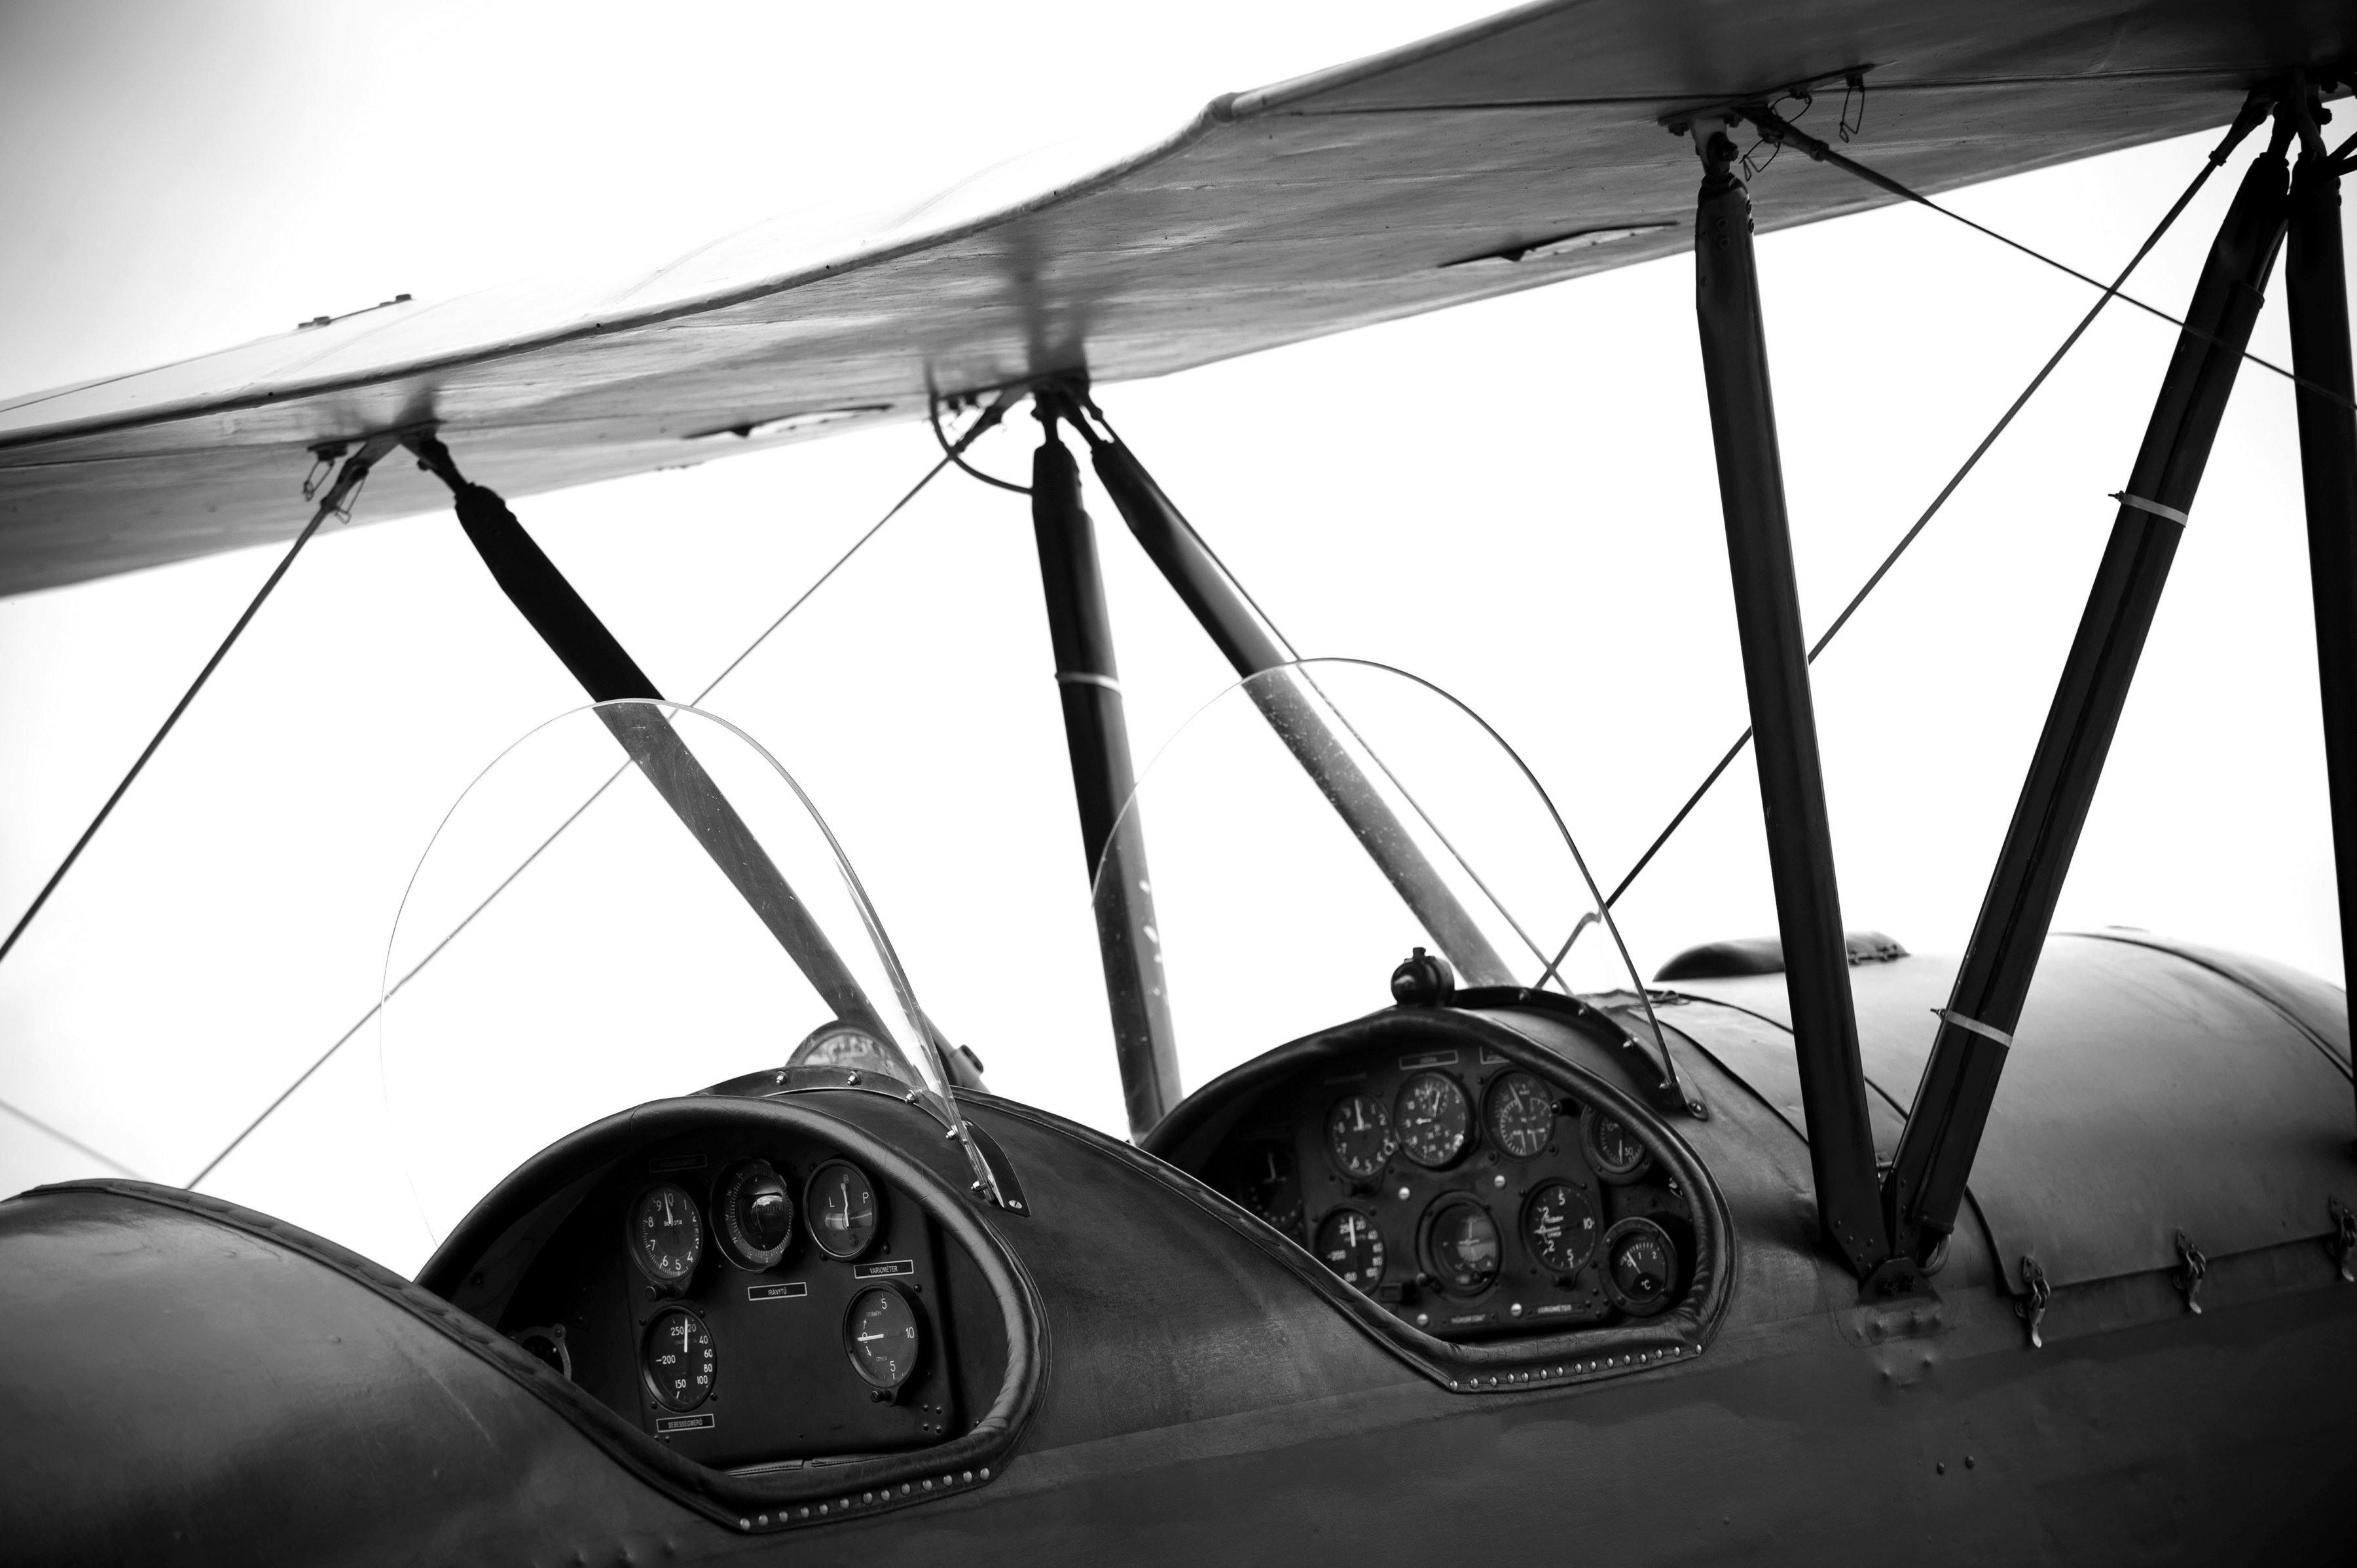 Papermoon Fototapete Flugzeug Schwarz & Weiß